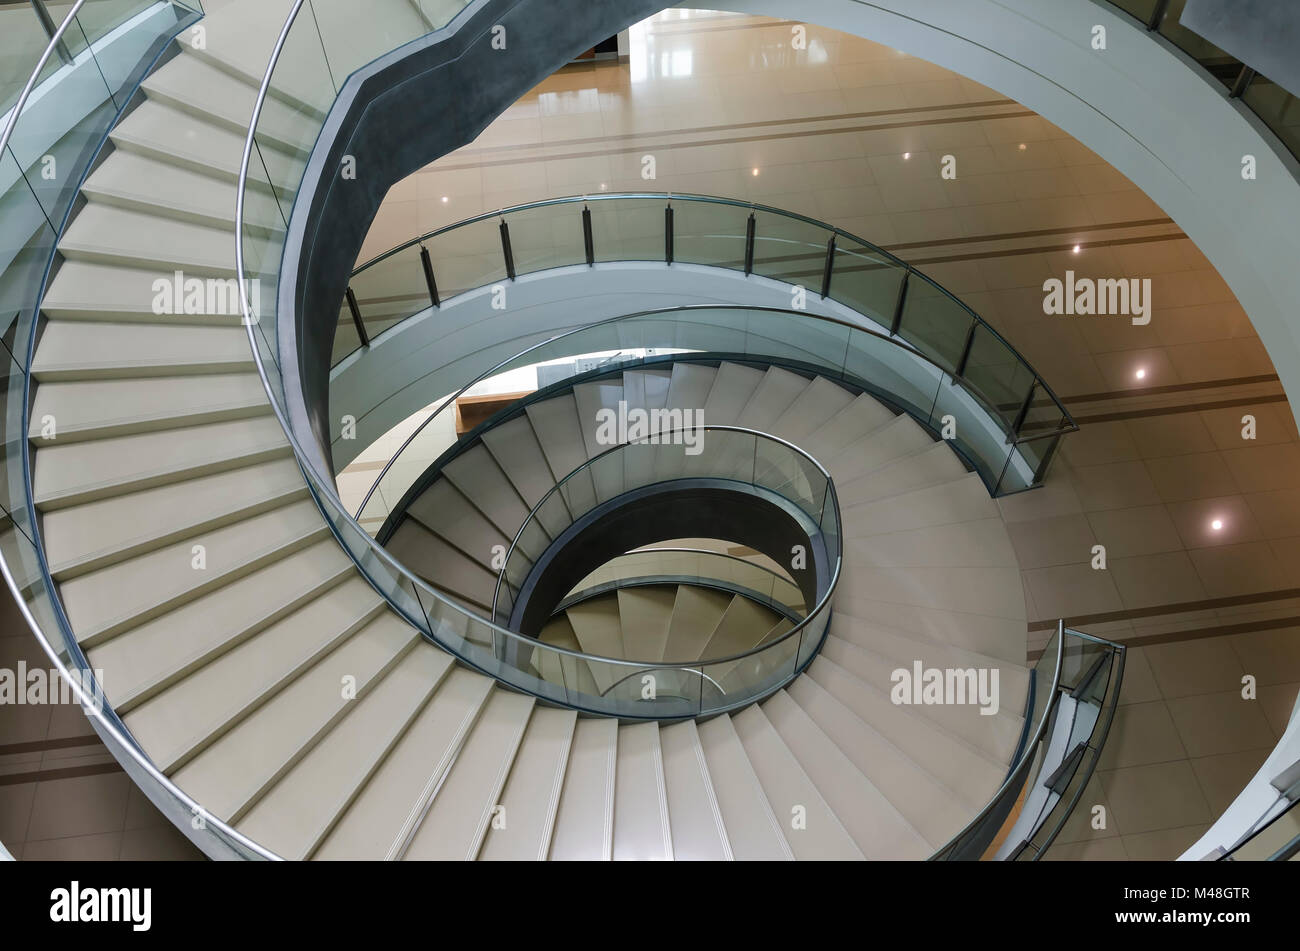 Kuala Lumpur, Malaysia - November 10, 2015: Modern spiral staircase in Sasana Kijang, Kuala Lumpur, Malaysia - contemporary interior spiral staircase  Stock Photo